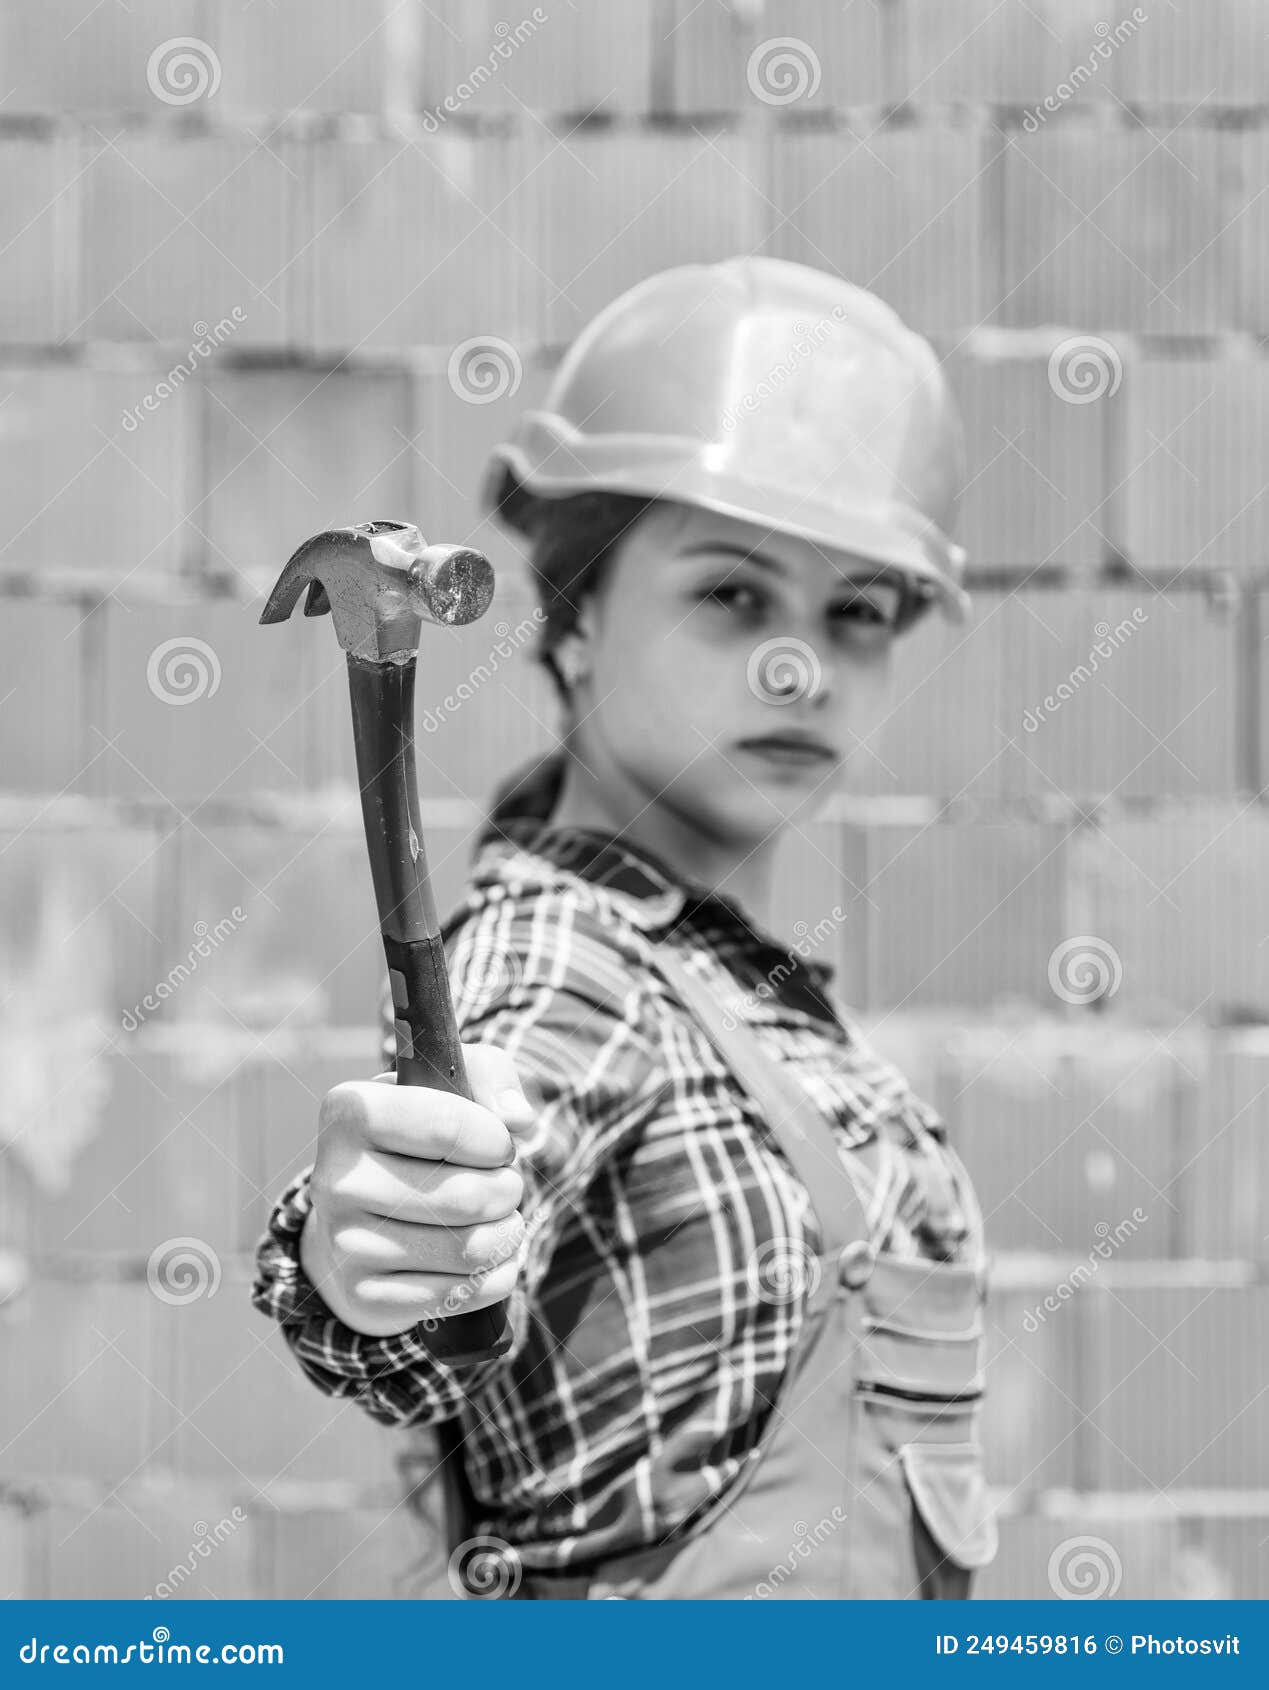 Teen Girl Builder In Protective Helmet Use Hammer Building Tool Stock